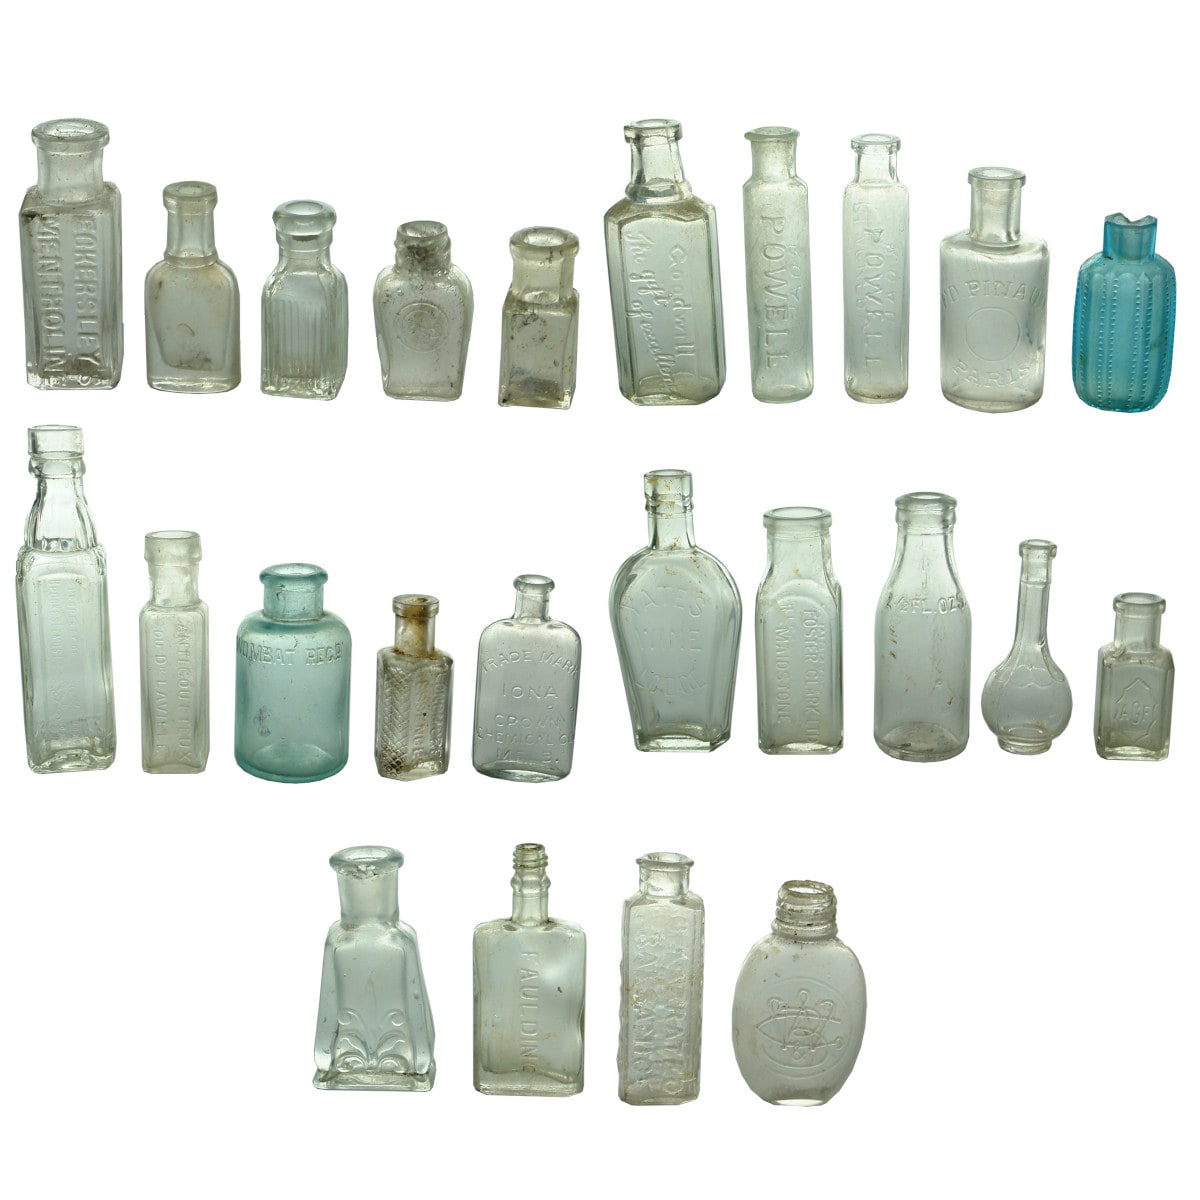 24 Small Bottles: Eckersley's; Poison; Perfume; Goodwill; Pinaud; Powell; Wombat; Longmore's; Effel Tower, etc. etc.